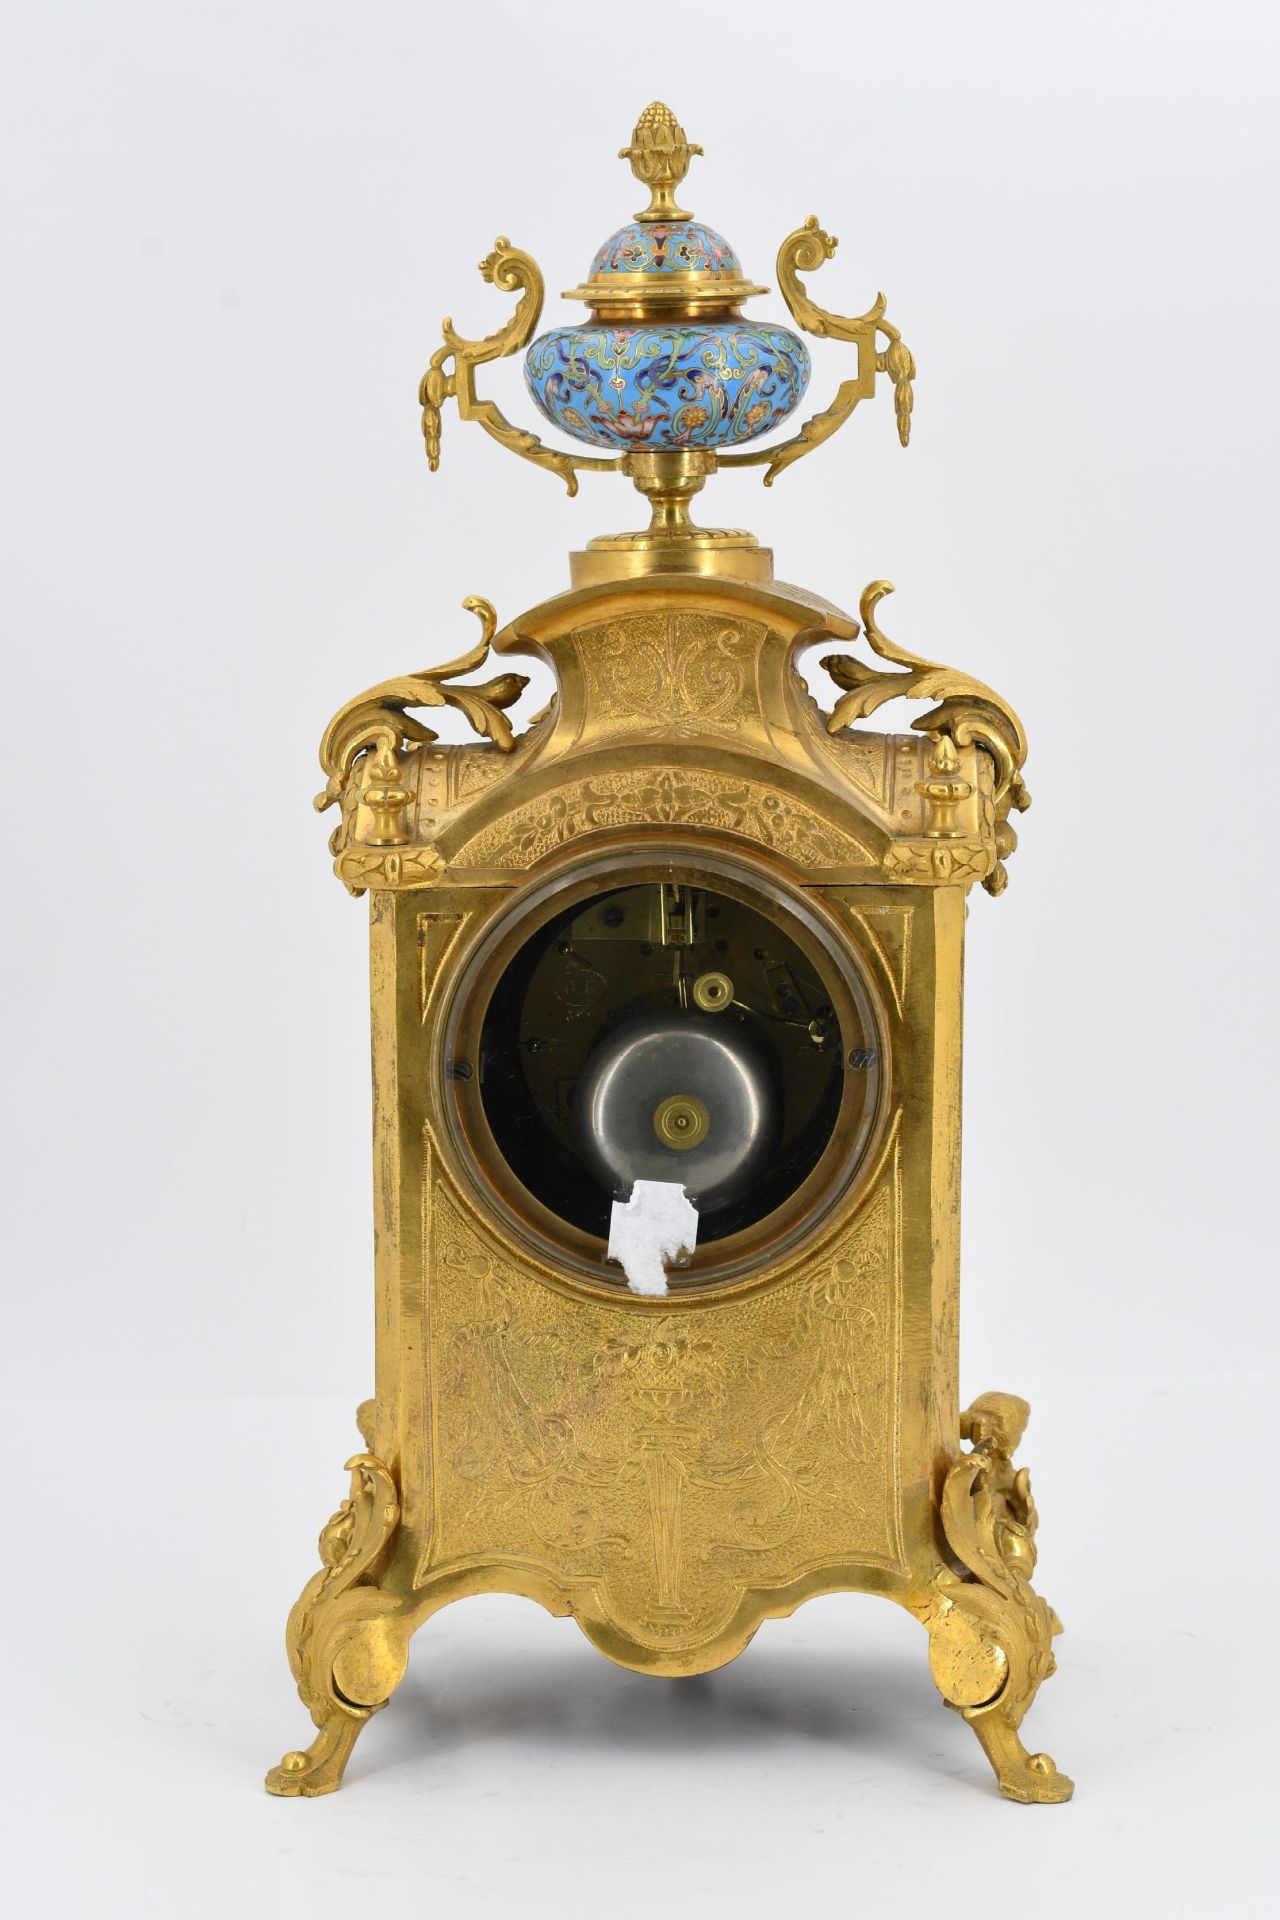 Pendulum clock with floral enamel décor - Image 4 of 5